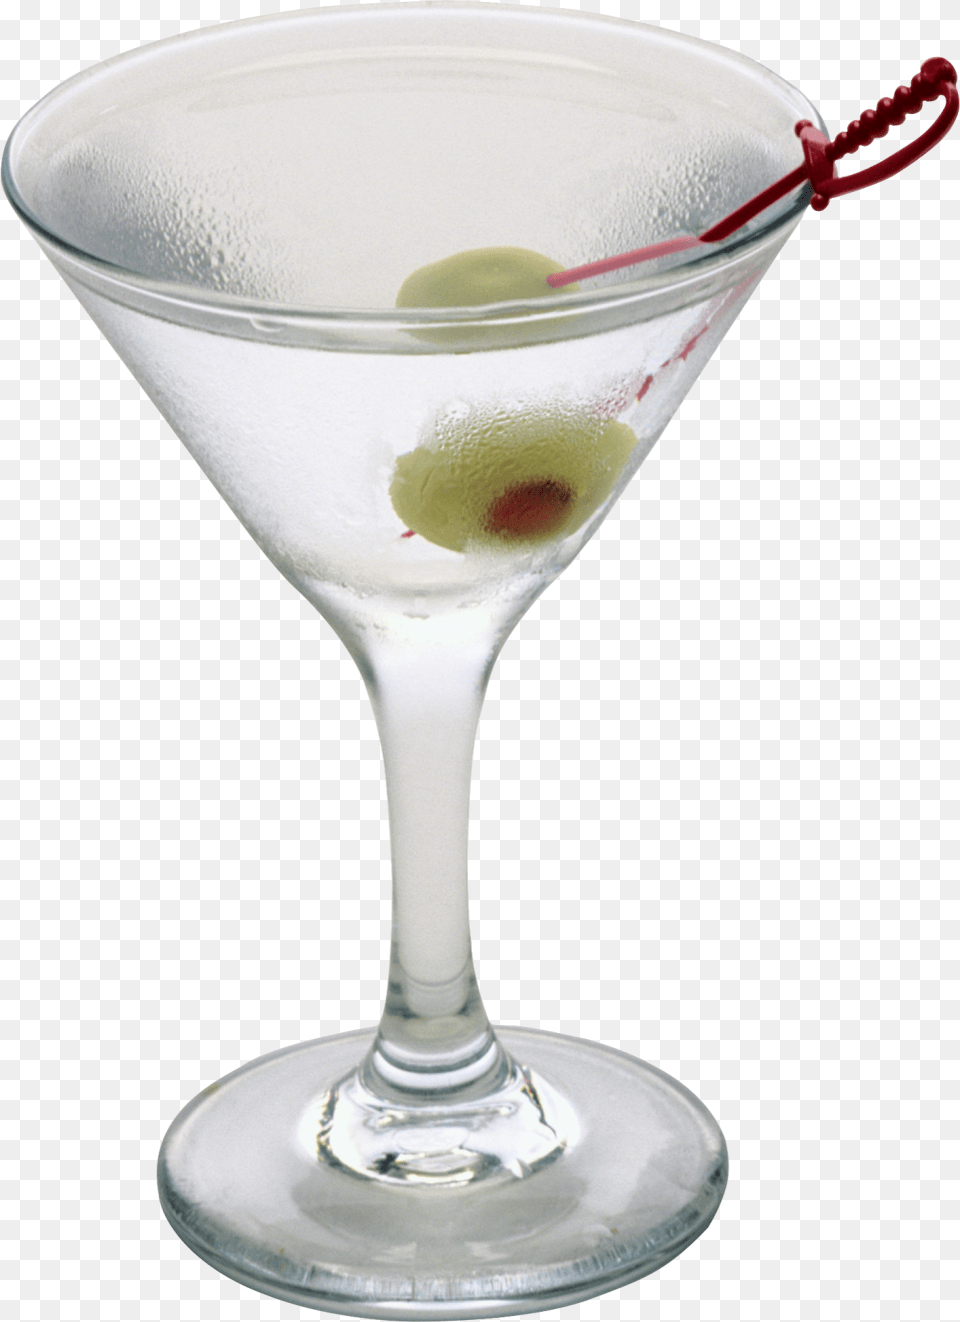 Cocktail Image, Alcohol, Beverage, Martini, Smoke Pipe Free Png Download